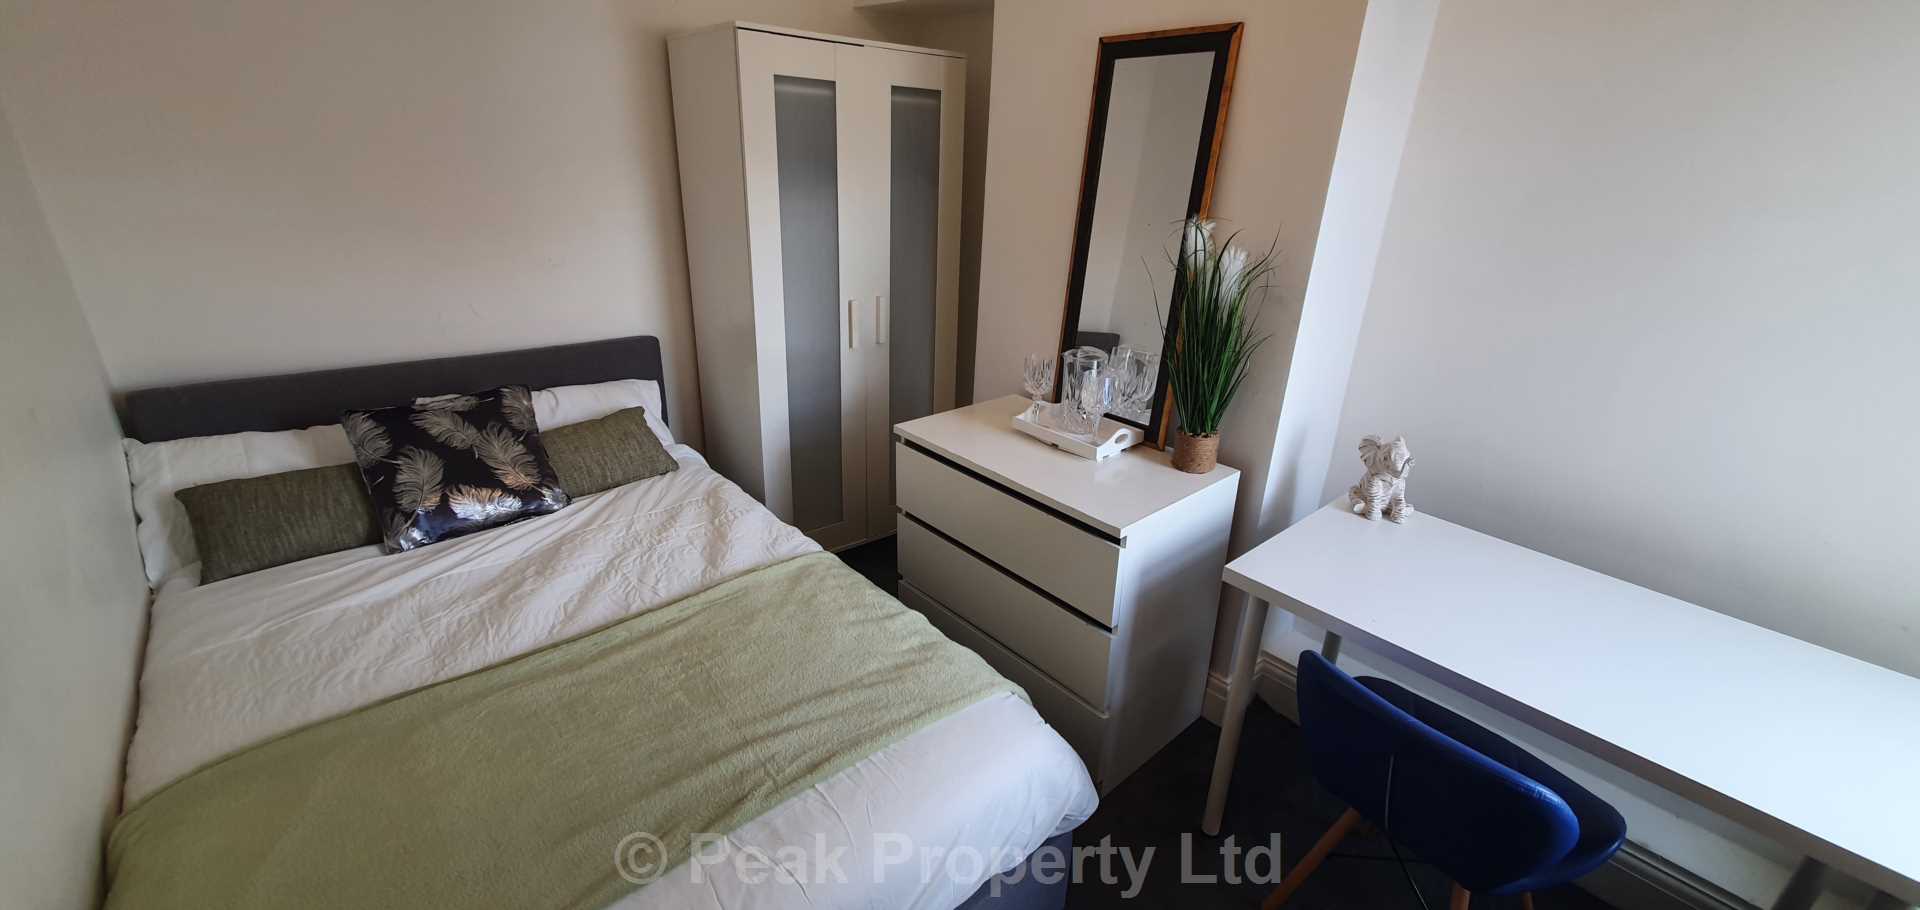 2 ROOMS AVAILABLE - ONLY £250 DEPOSIT! Room 4 - Salisbury Avenue, Westcliff On Sea, Image 1